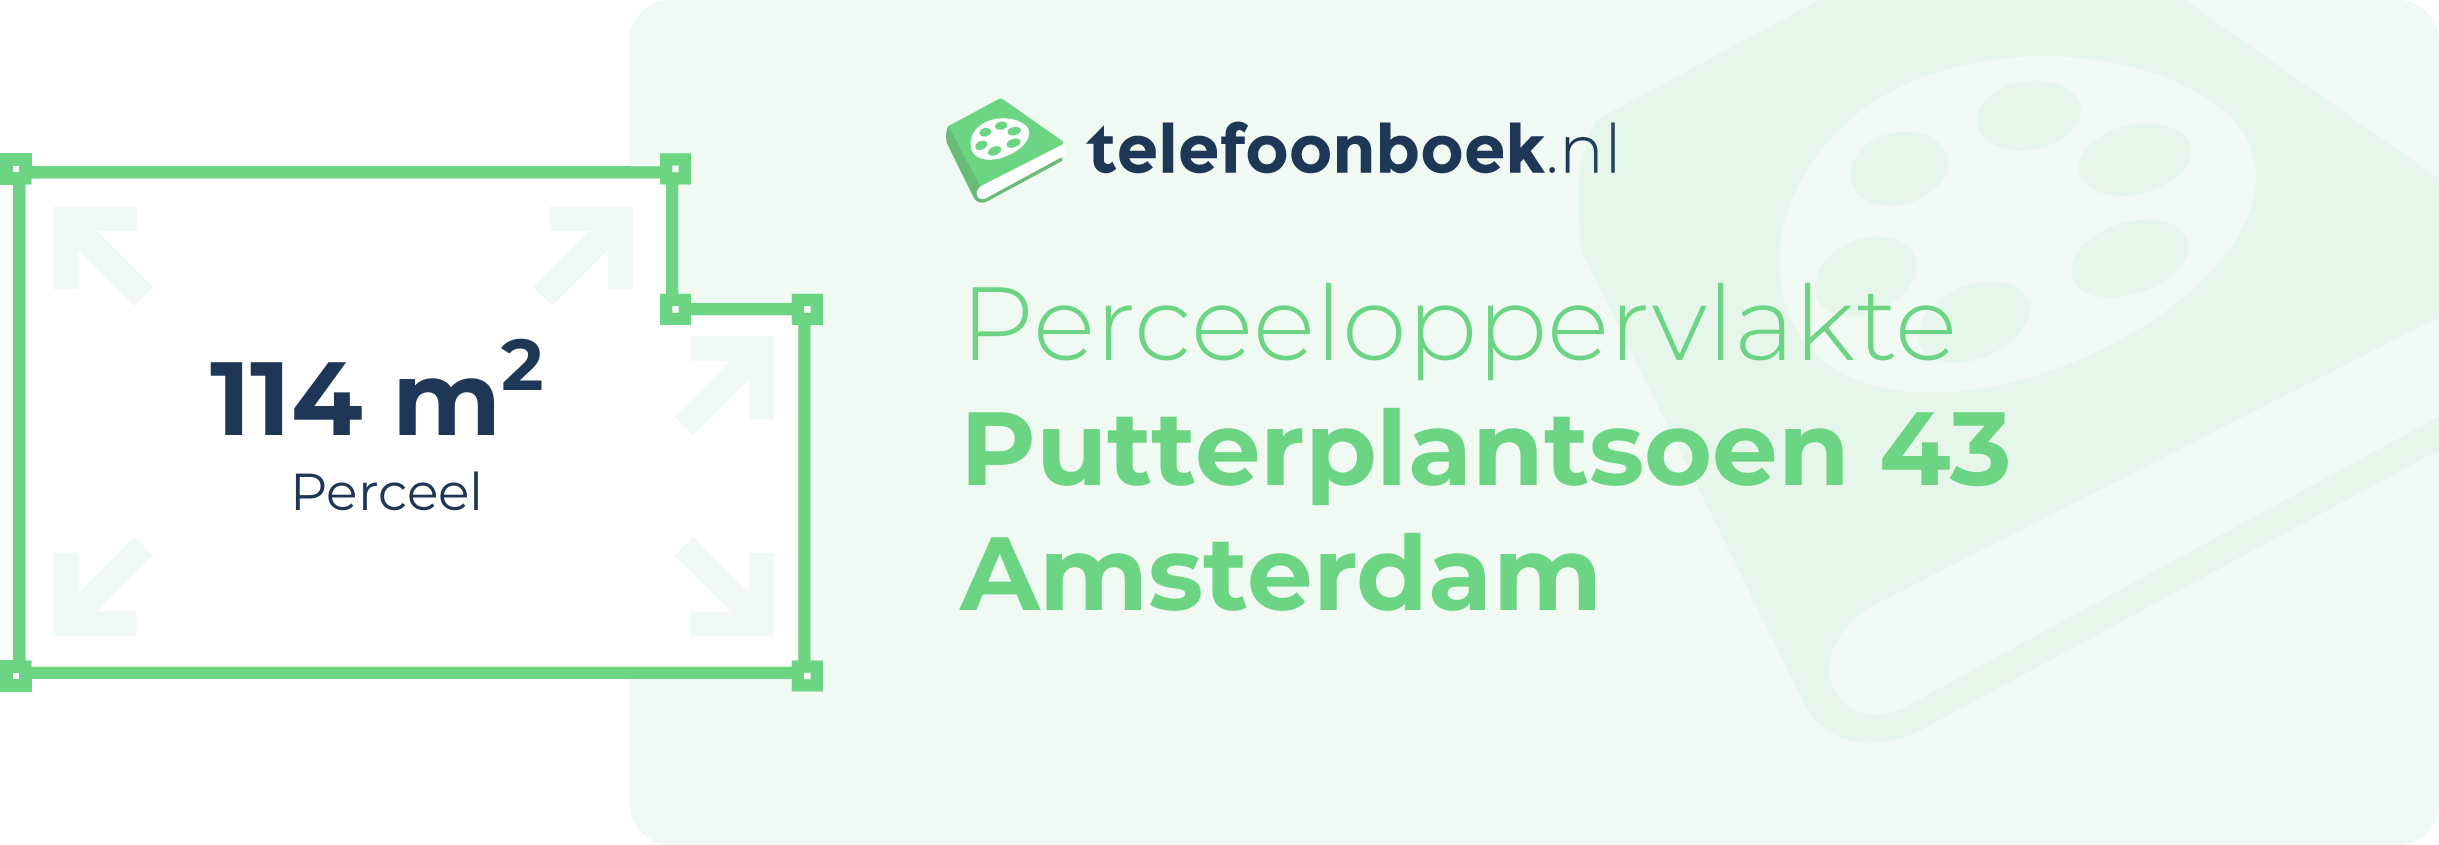 Perceeloppervlakte Putterplantsoen 43 Amsterdam